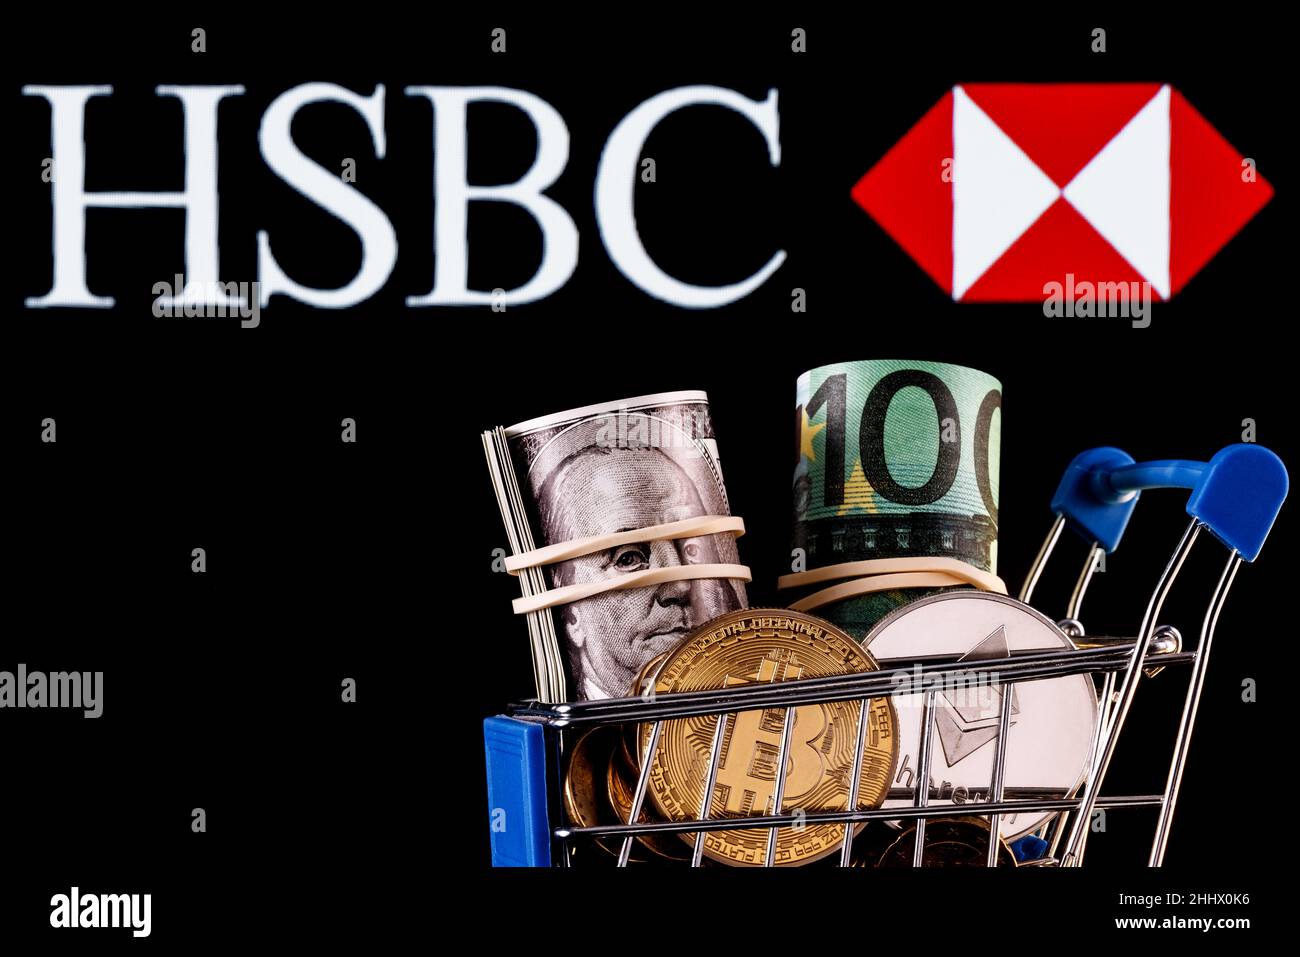 hsbc buy crypto